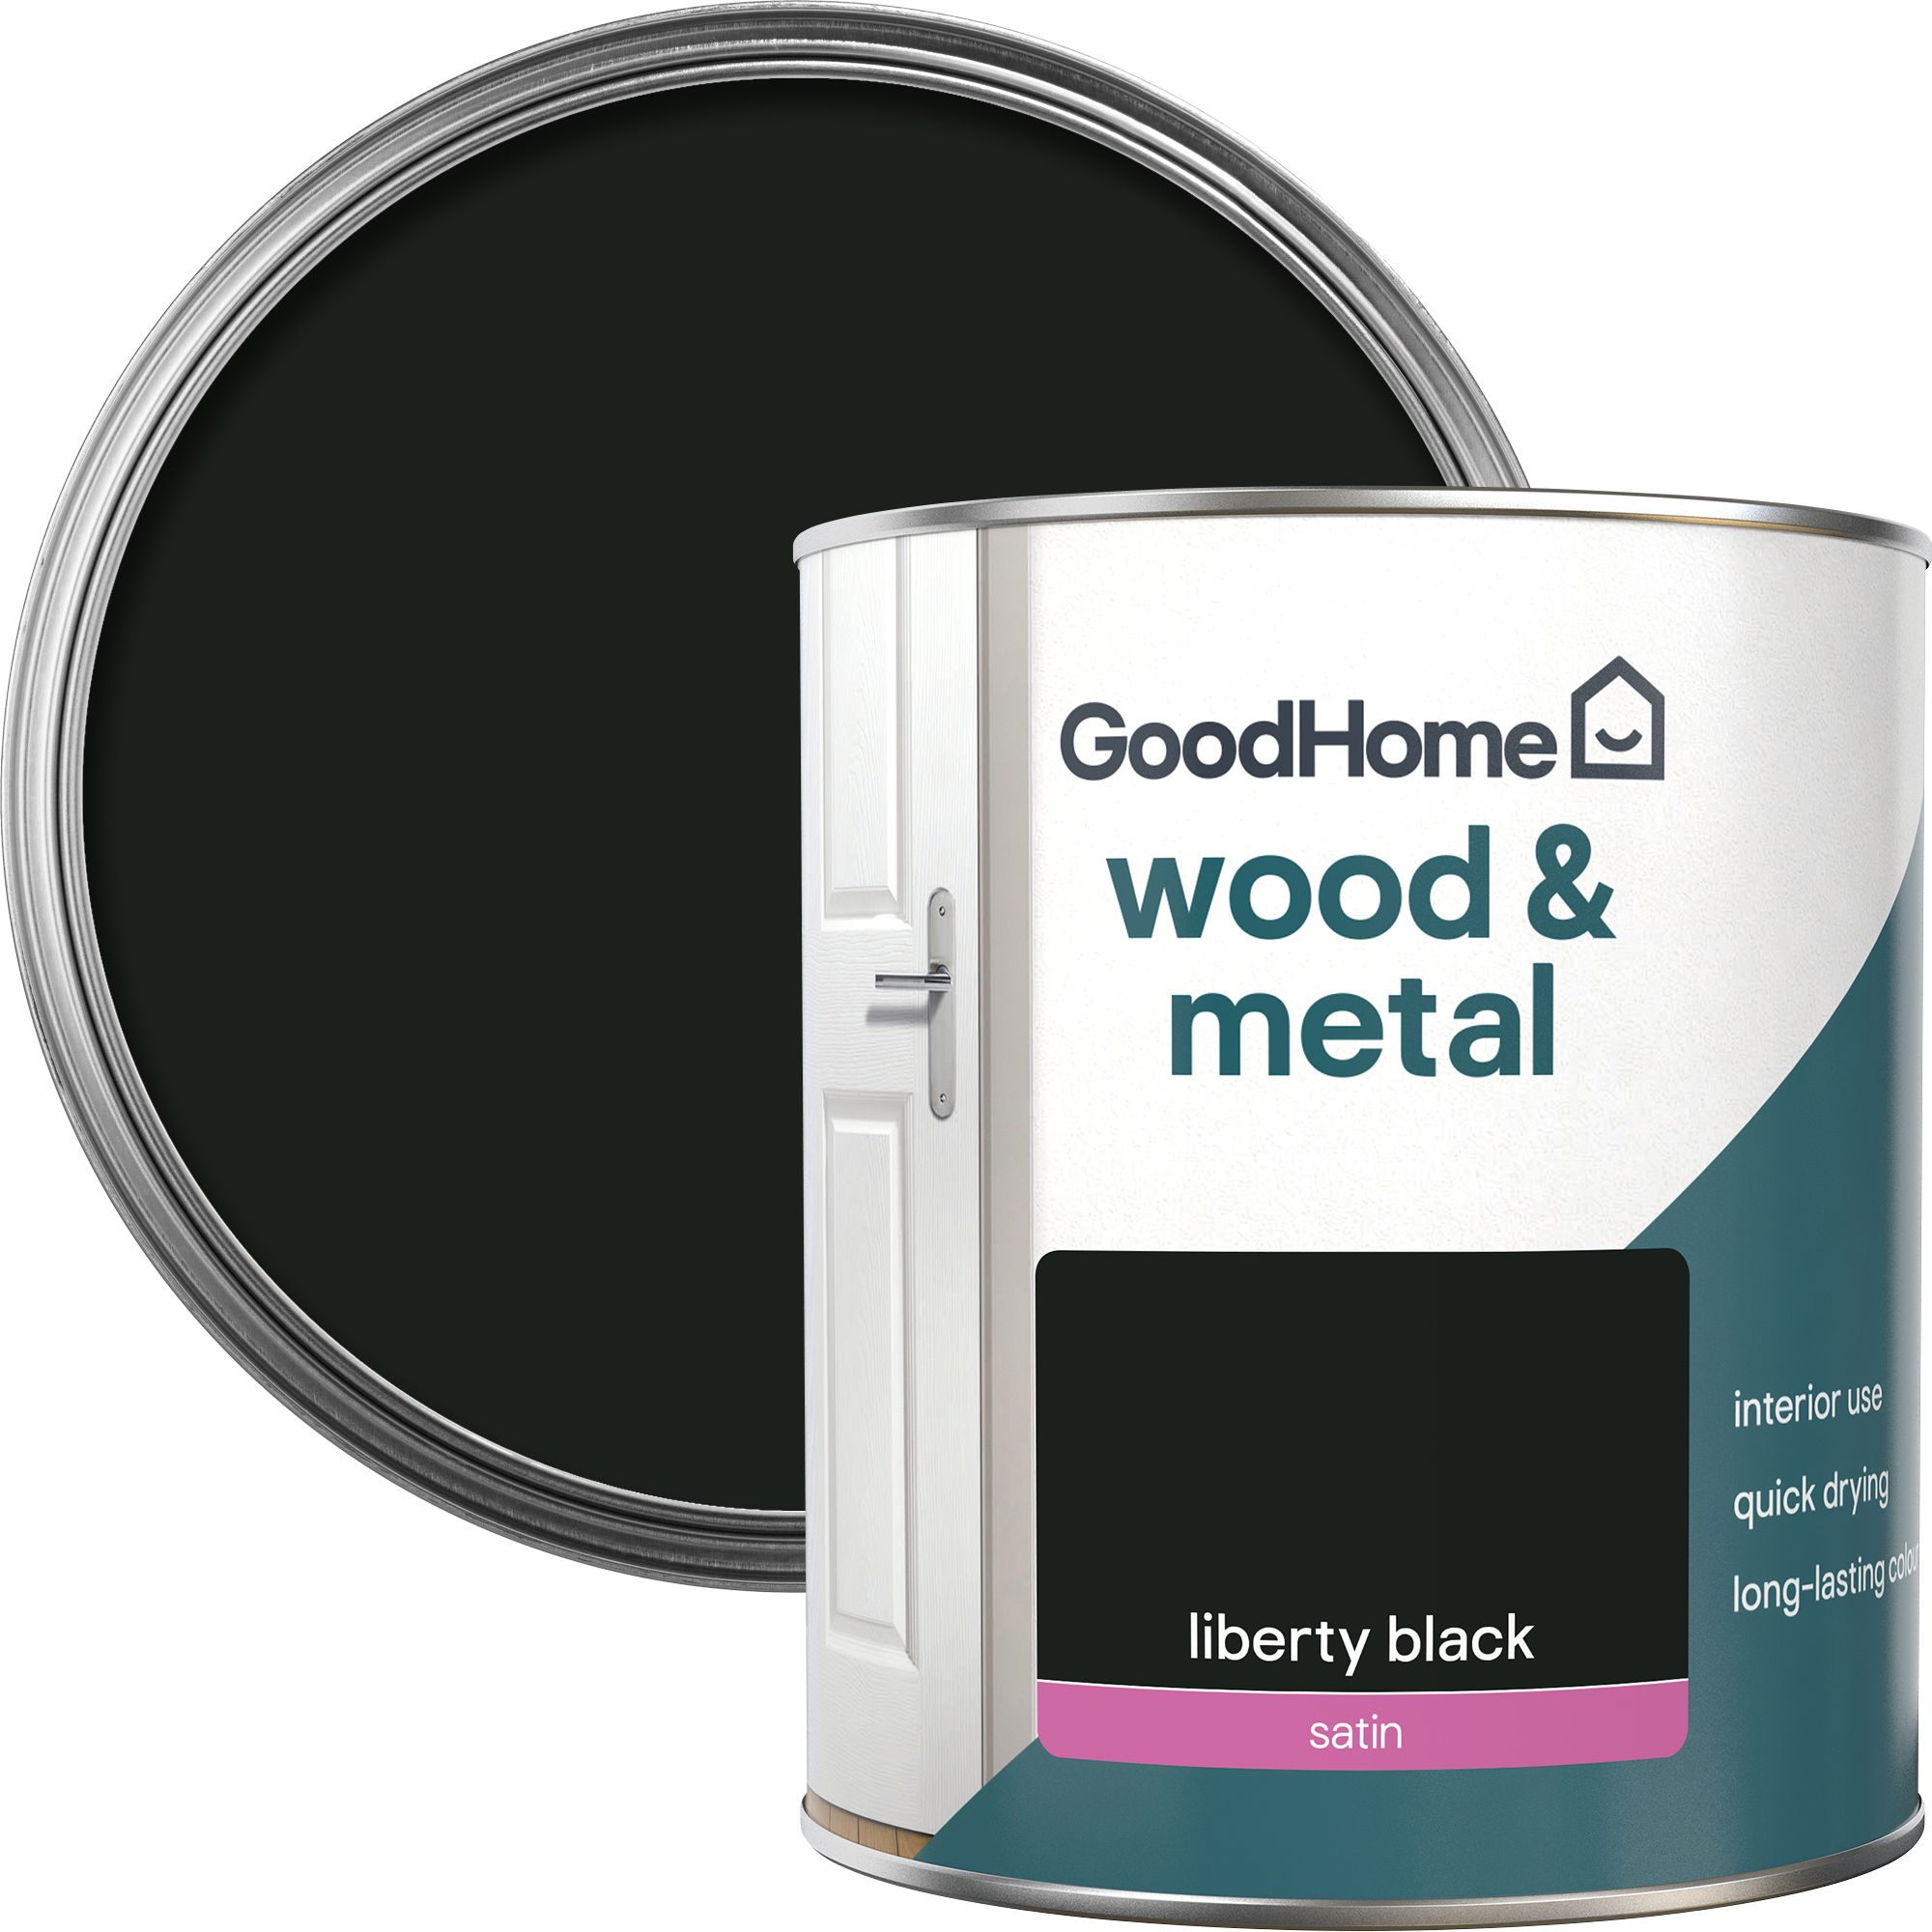 GoodHome Liberty black Satin Metal & wood paint, 750ml